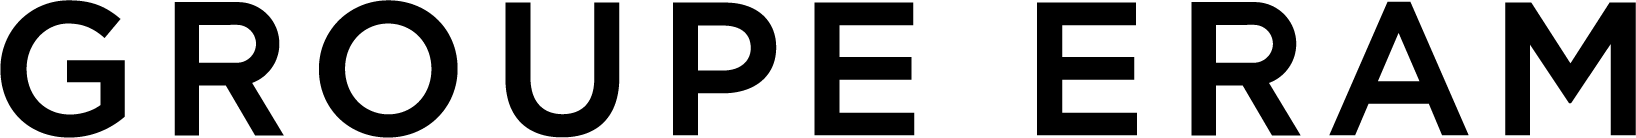 Logo Groupe Eram